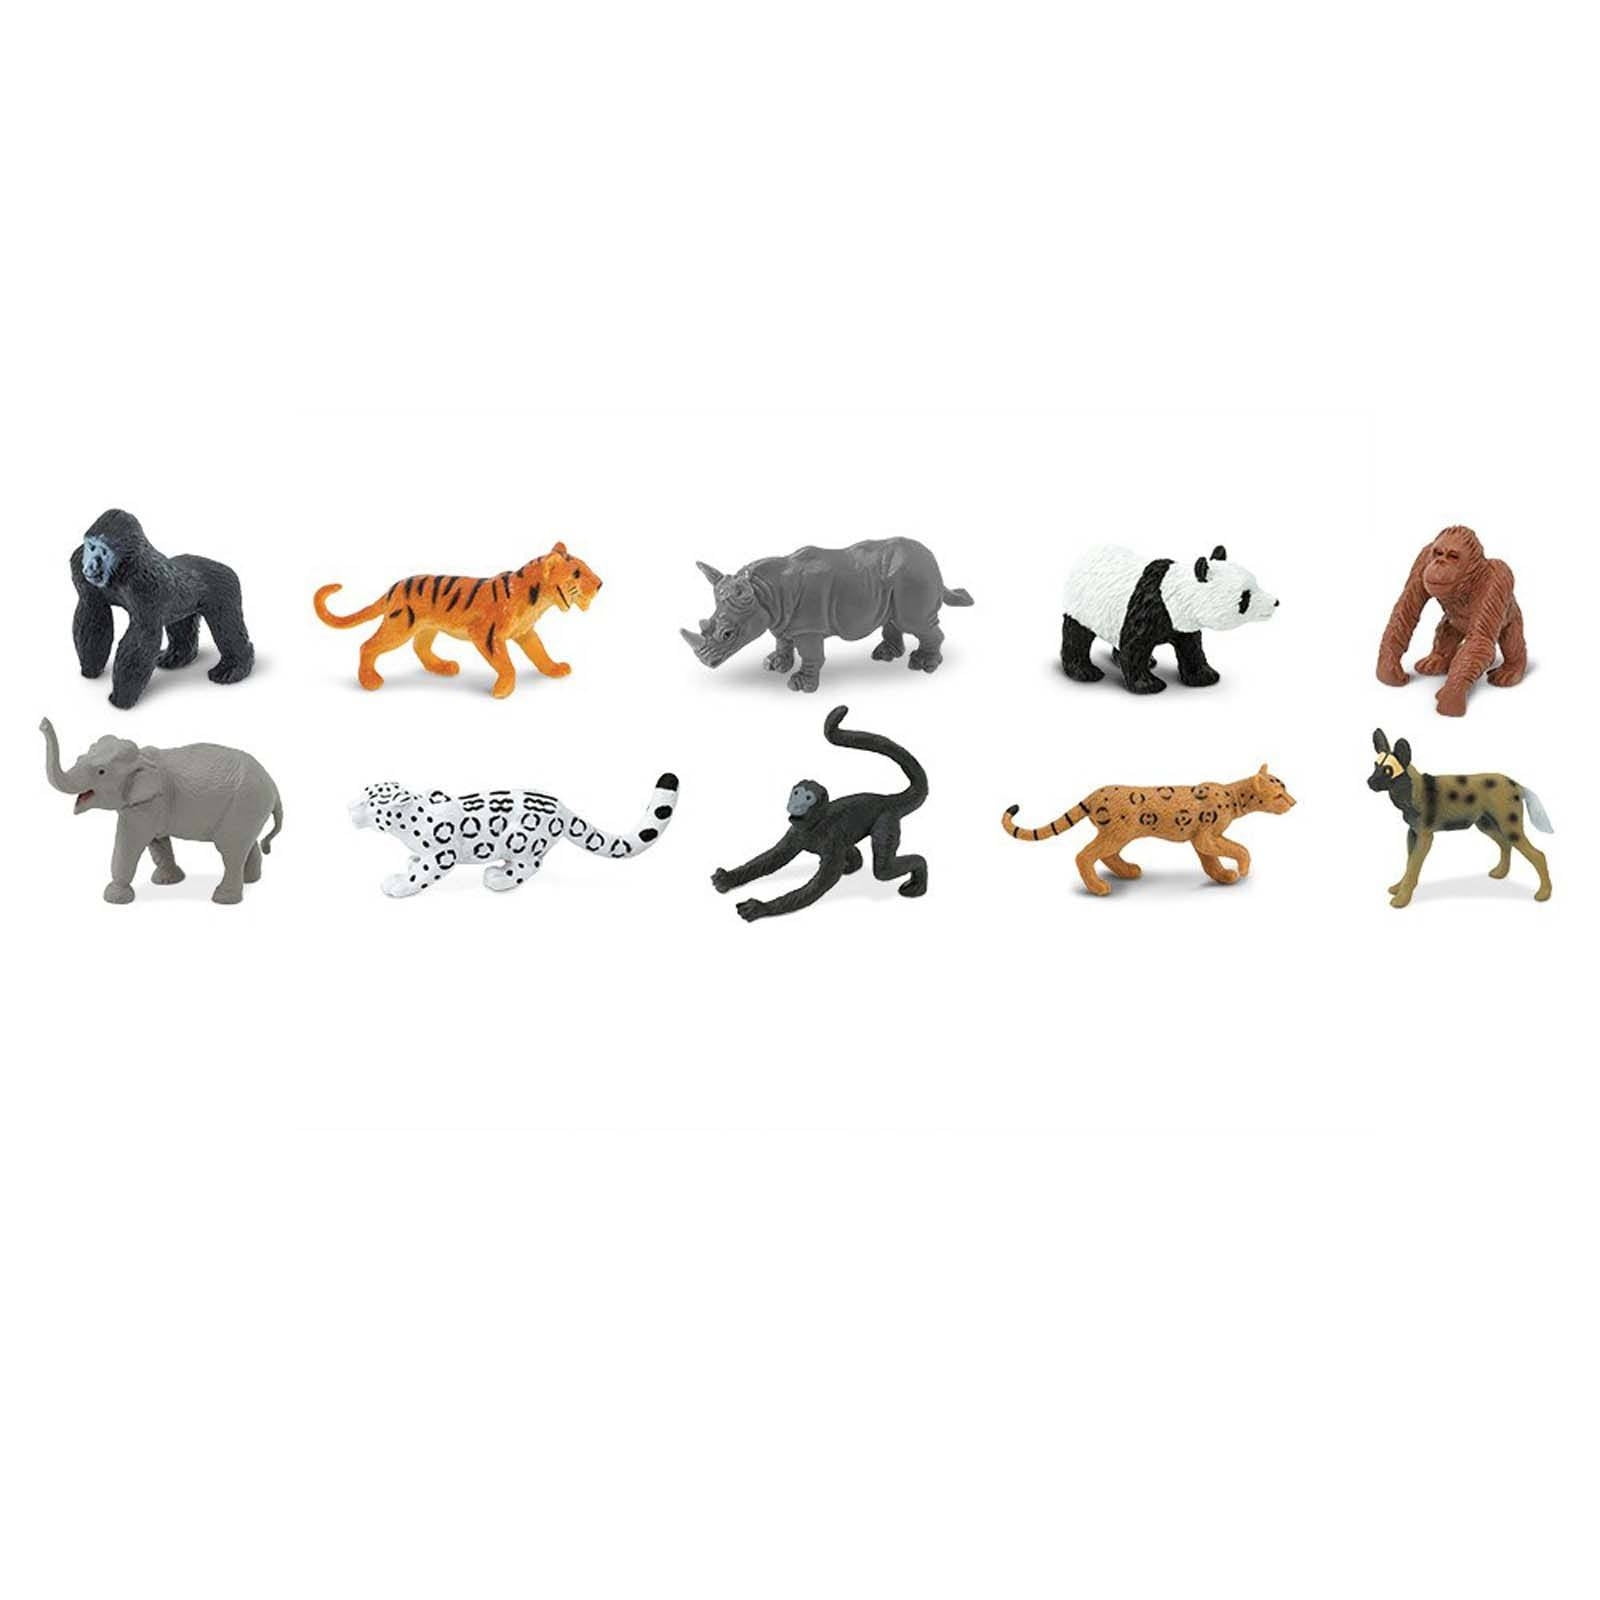 Dogs Toob Mini Figures Safari Ltd NEW Toys Collectibles Education Kids Animals 